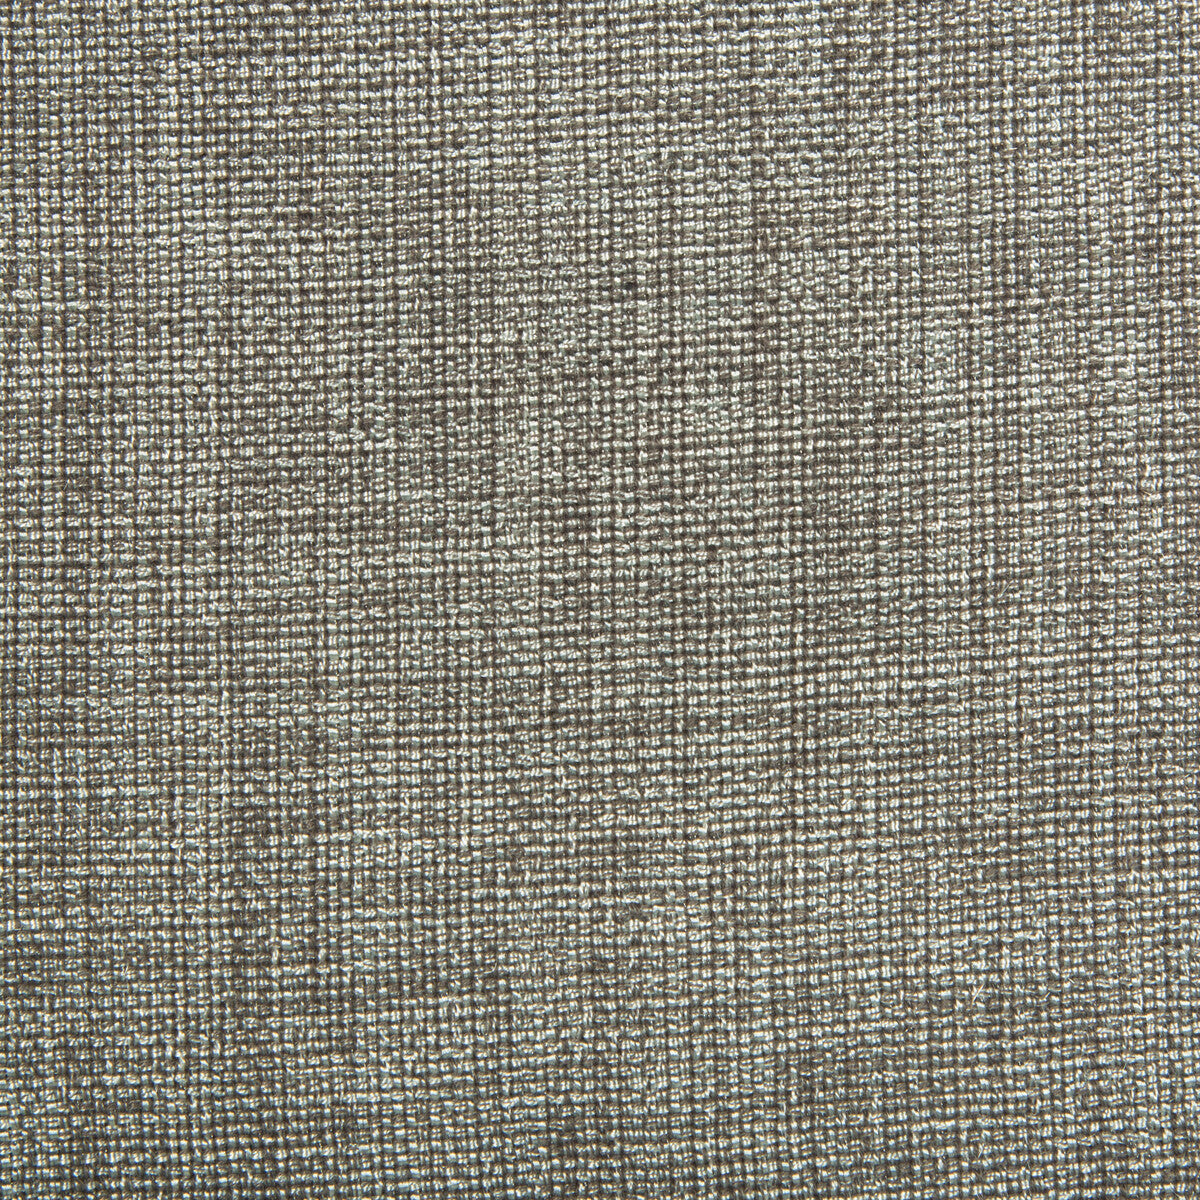 Kravet Smart fabric in 34939-11 color - pattern 34939.11.0 - by Kravet Smart